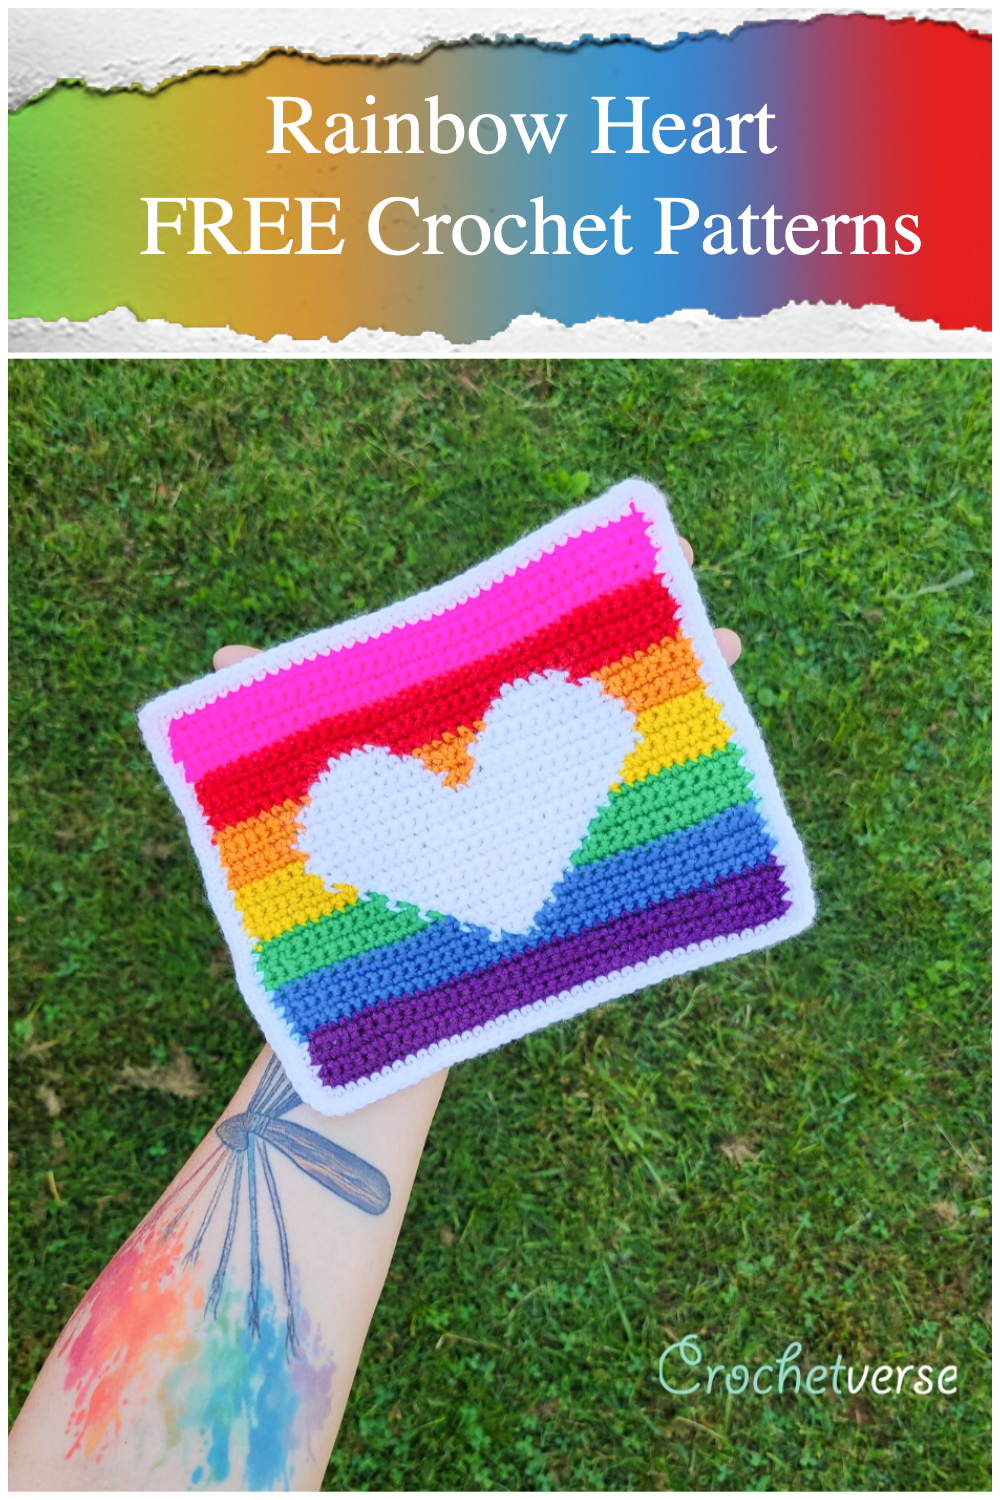 Rainbow Heart FREE Crochet Patterns